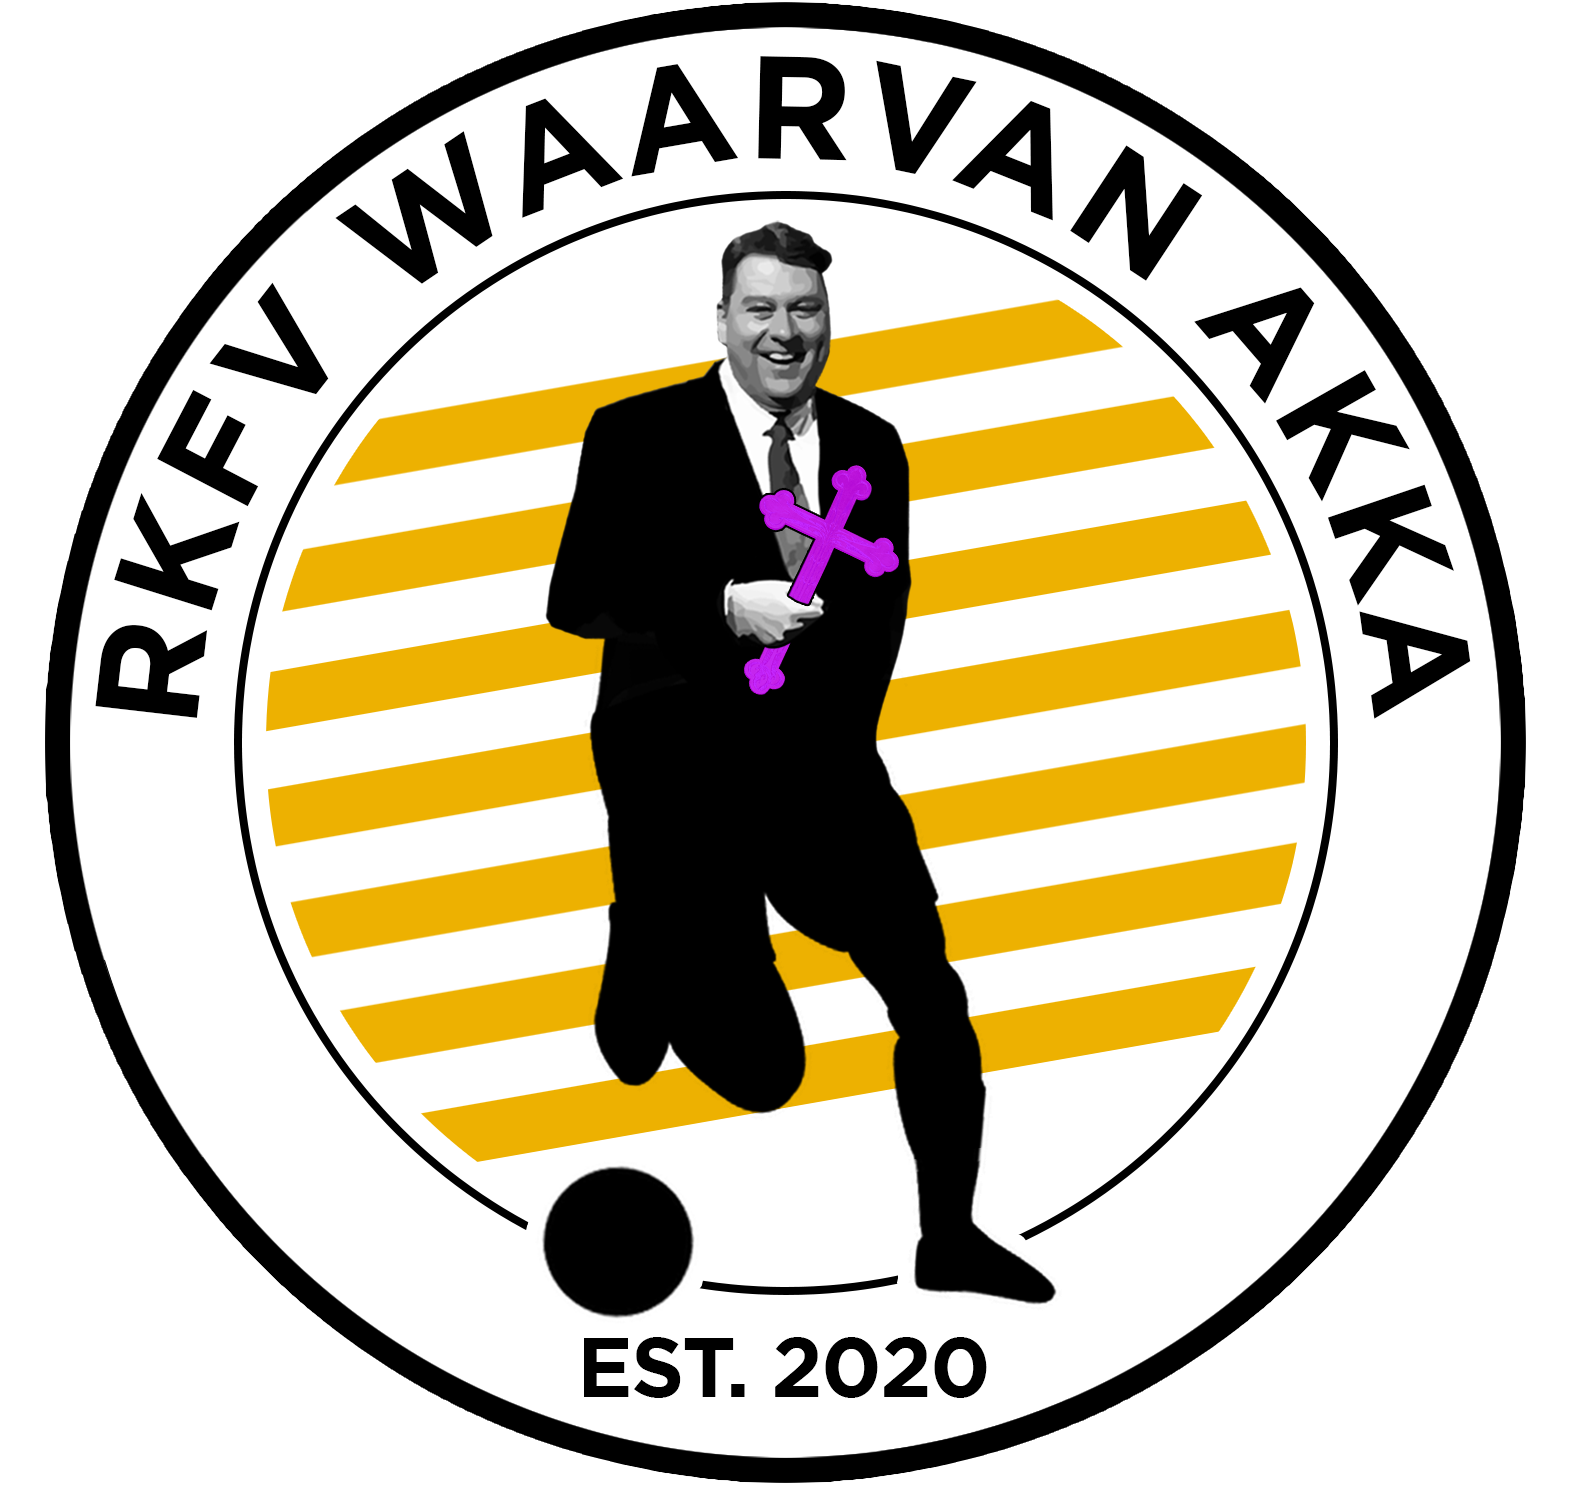 RKFV Waarvan Akka webshop